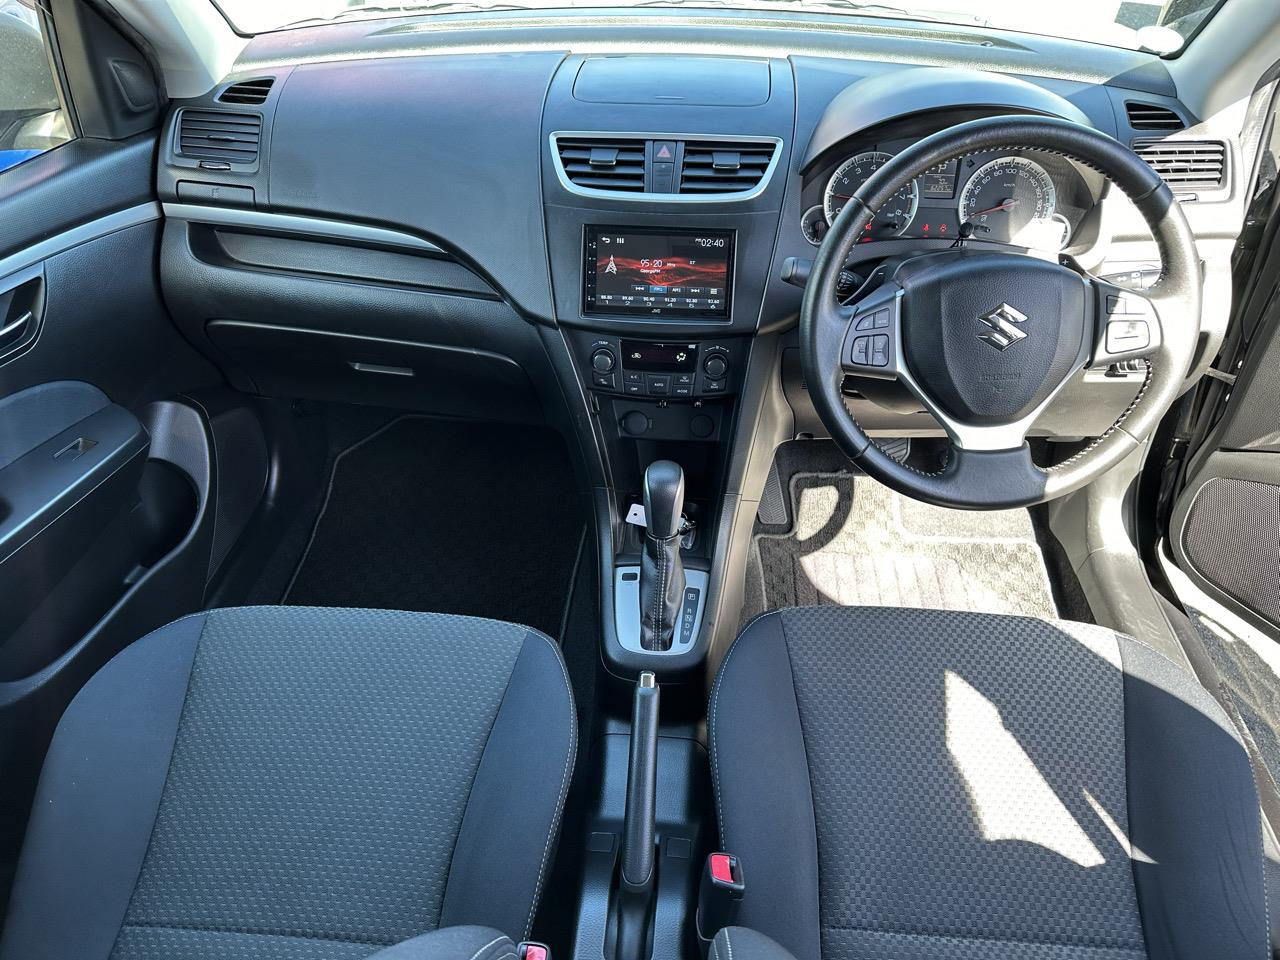 2014 Suzuki Swift RS image 12